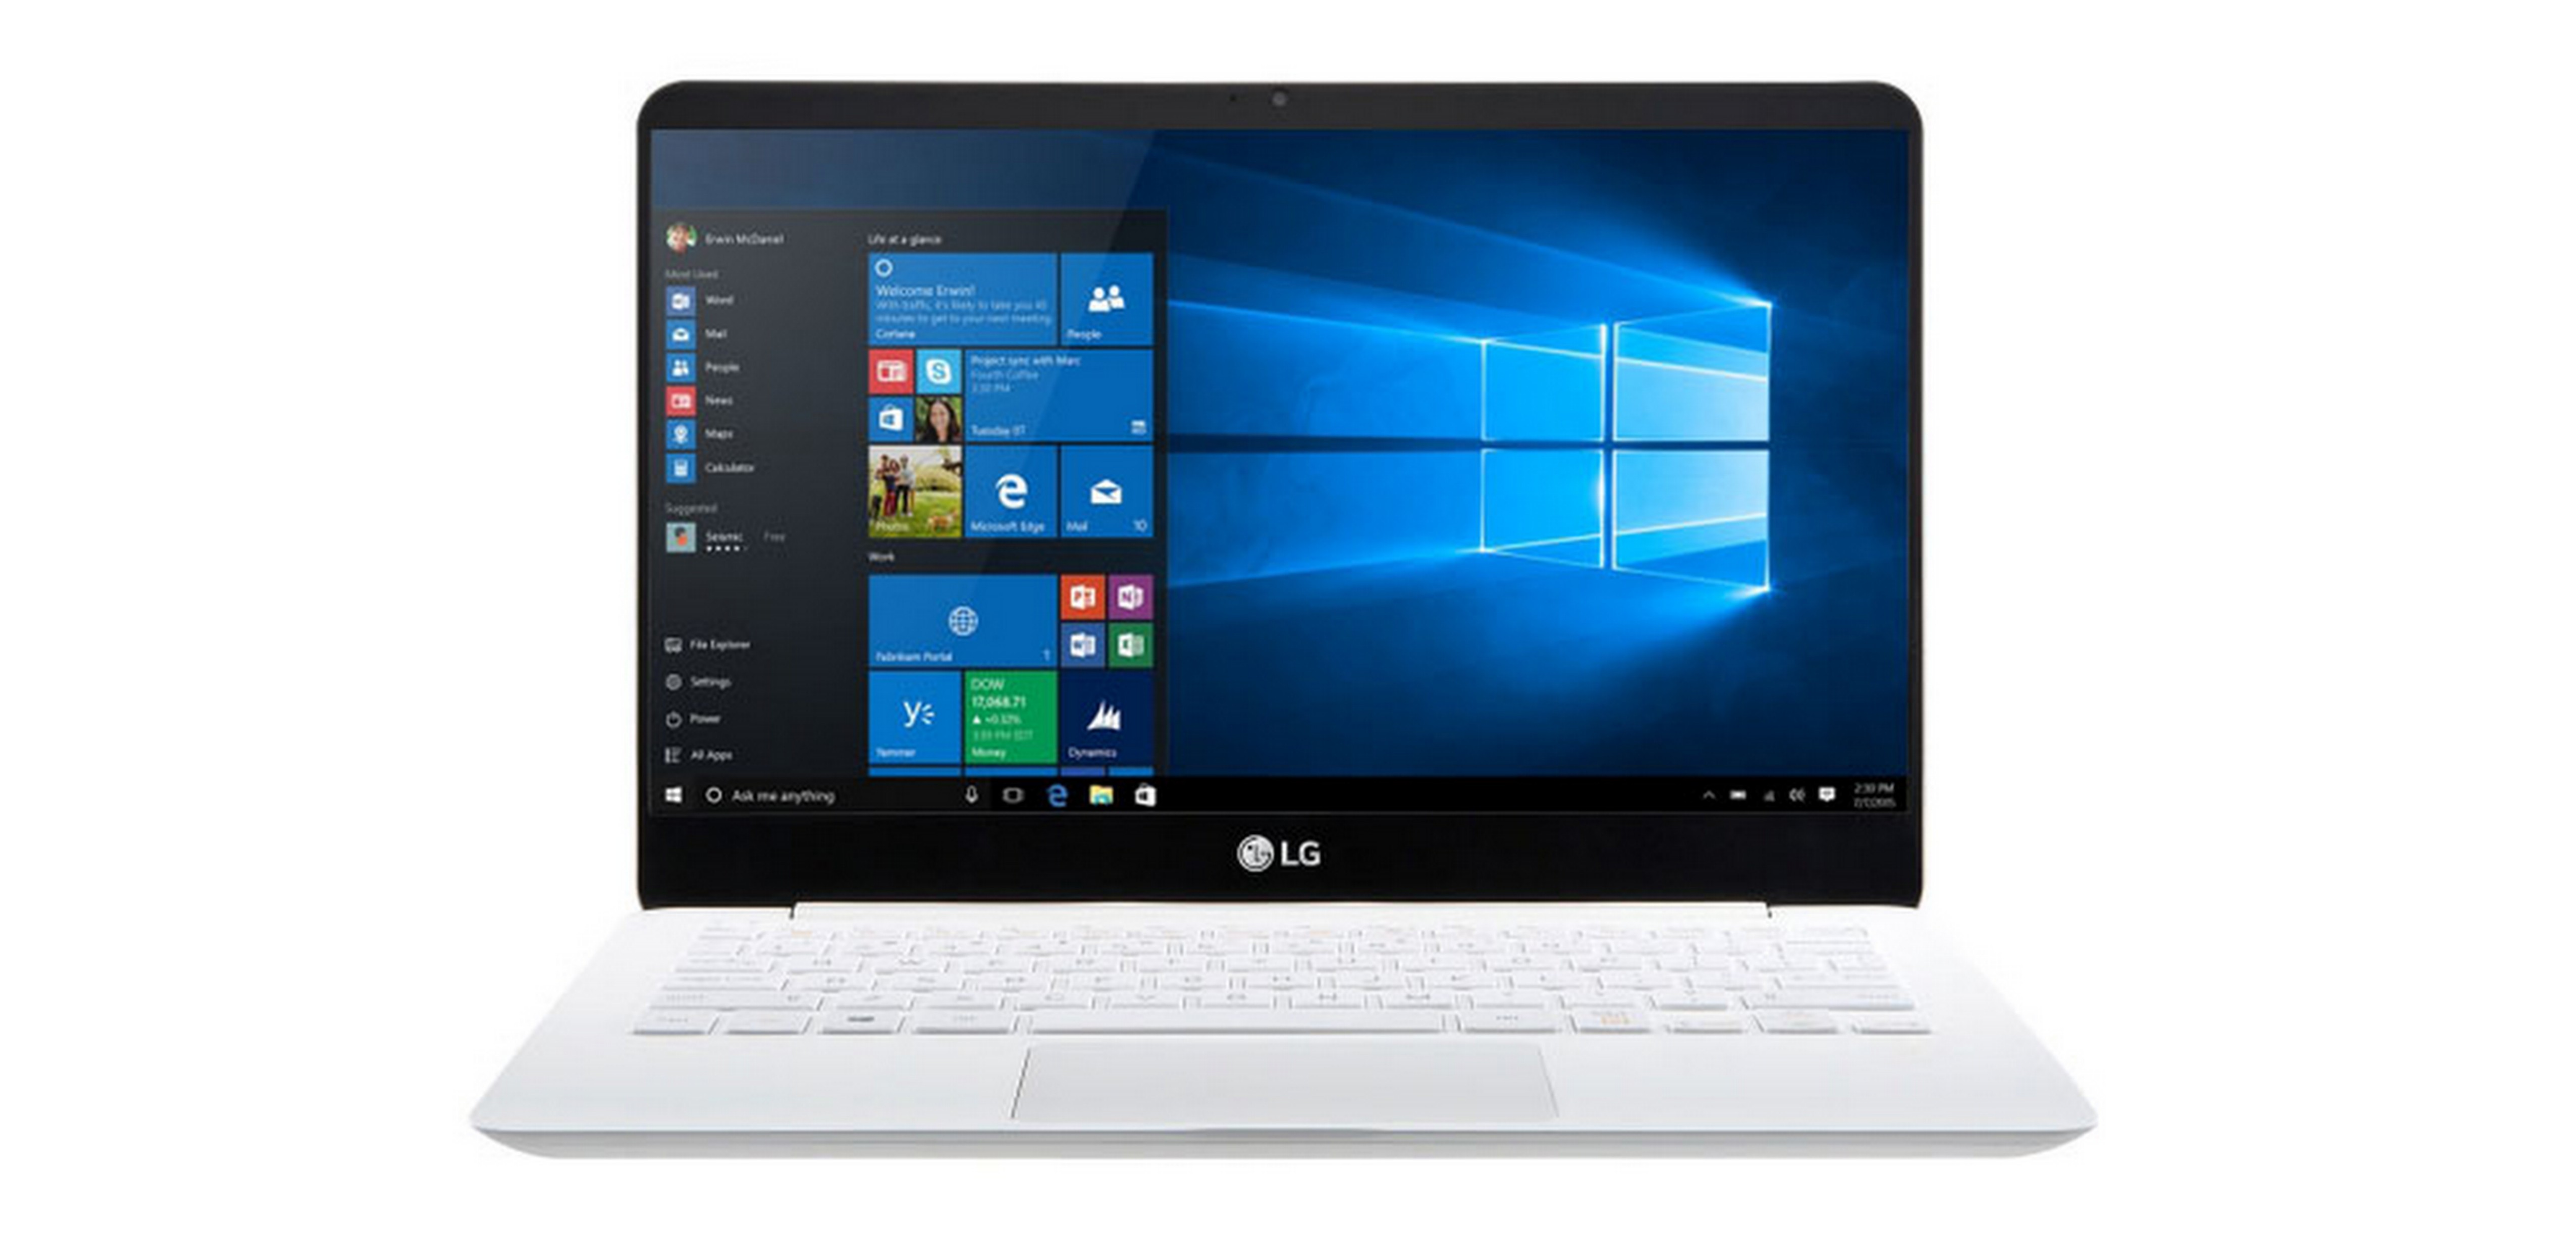 The LG Gram running Windows 10